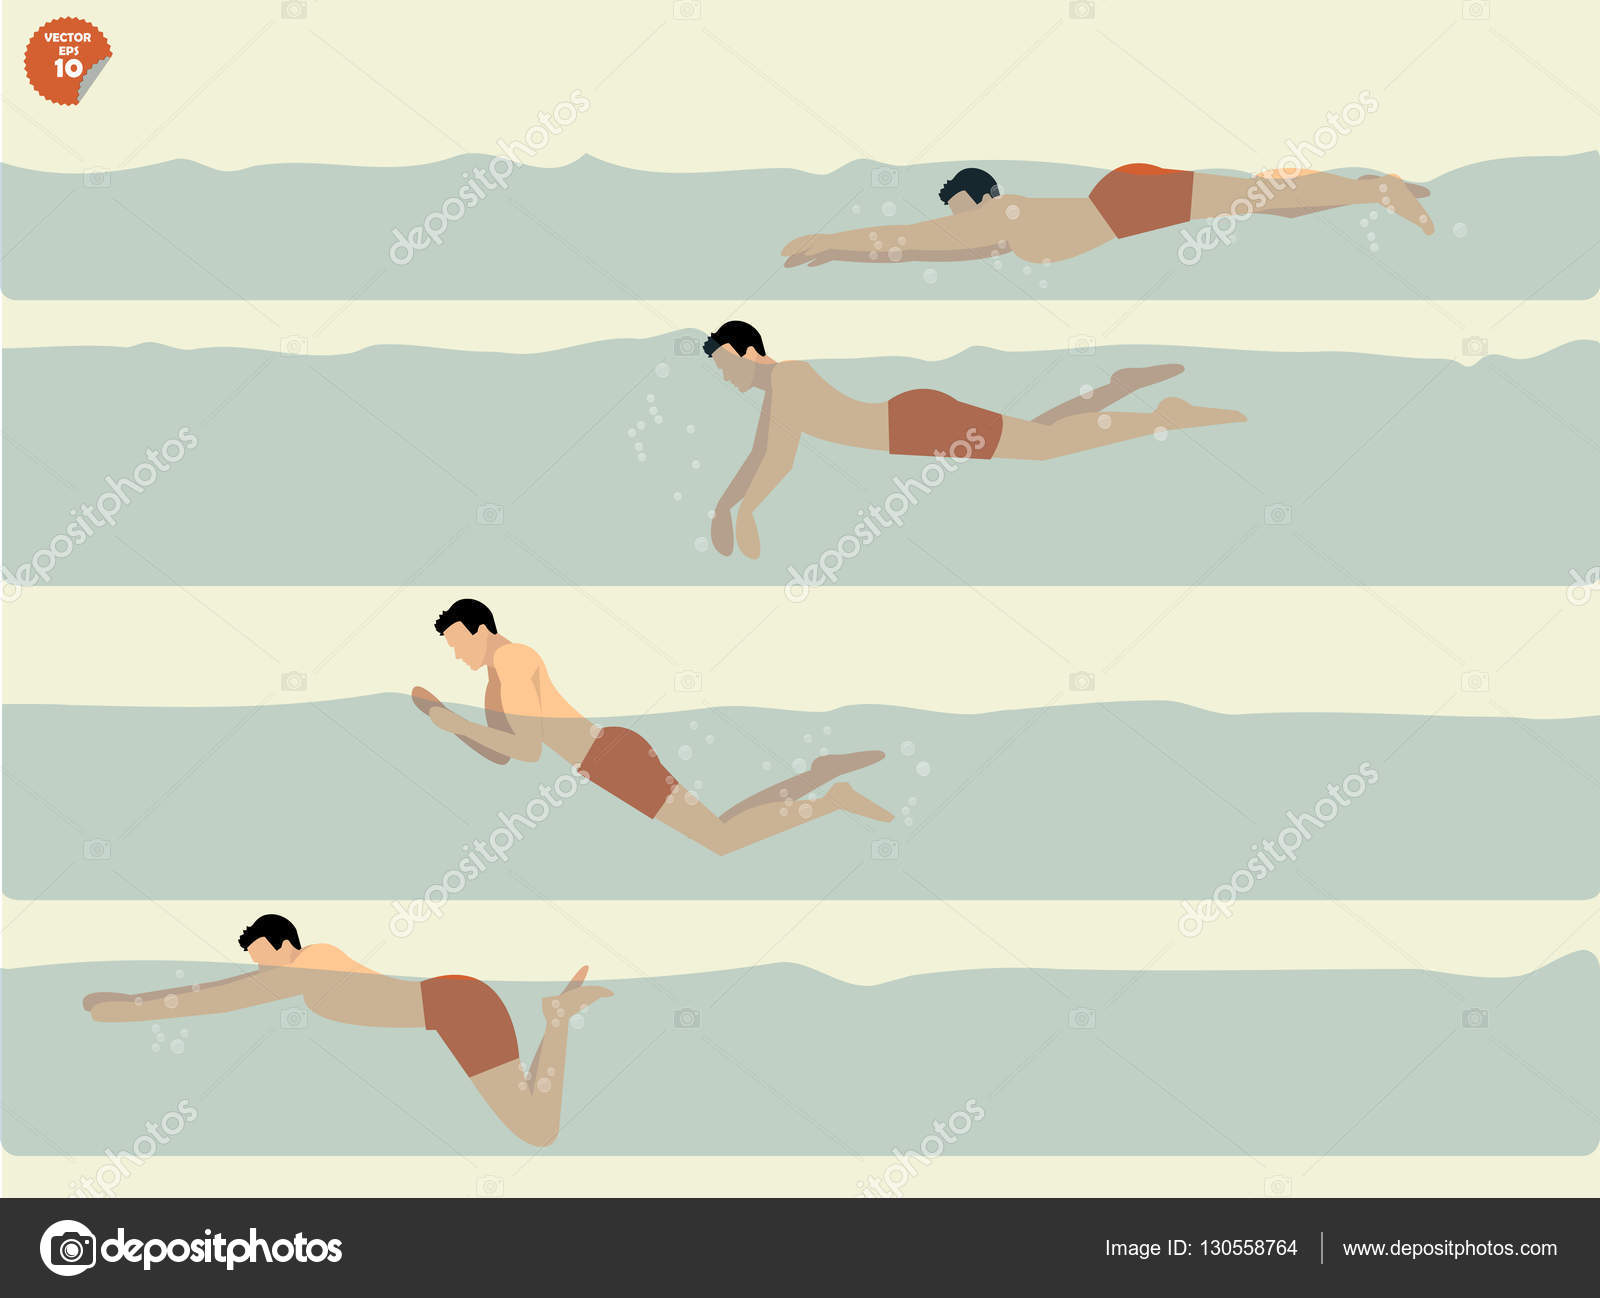 Колхидо-иберийский стиль плавания